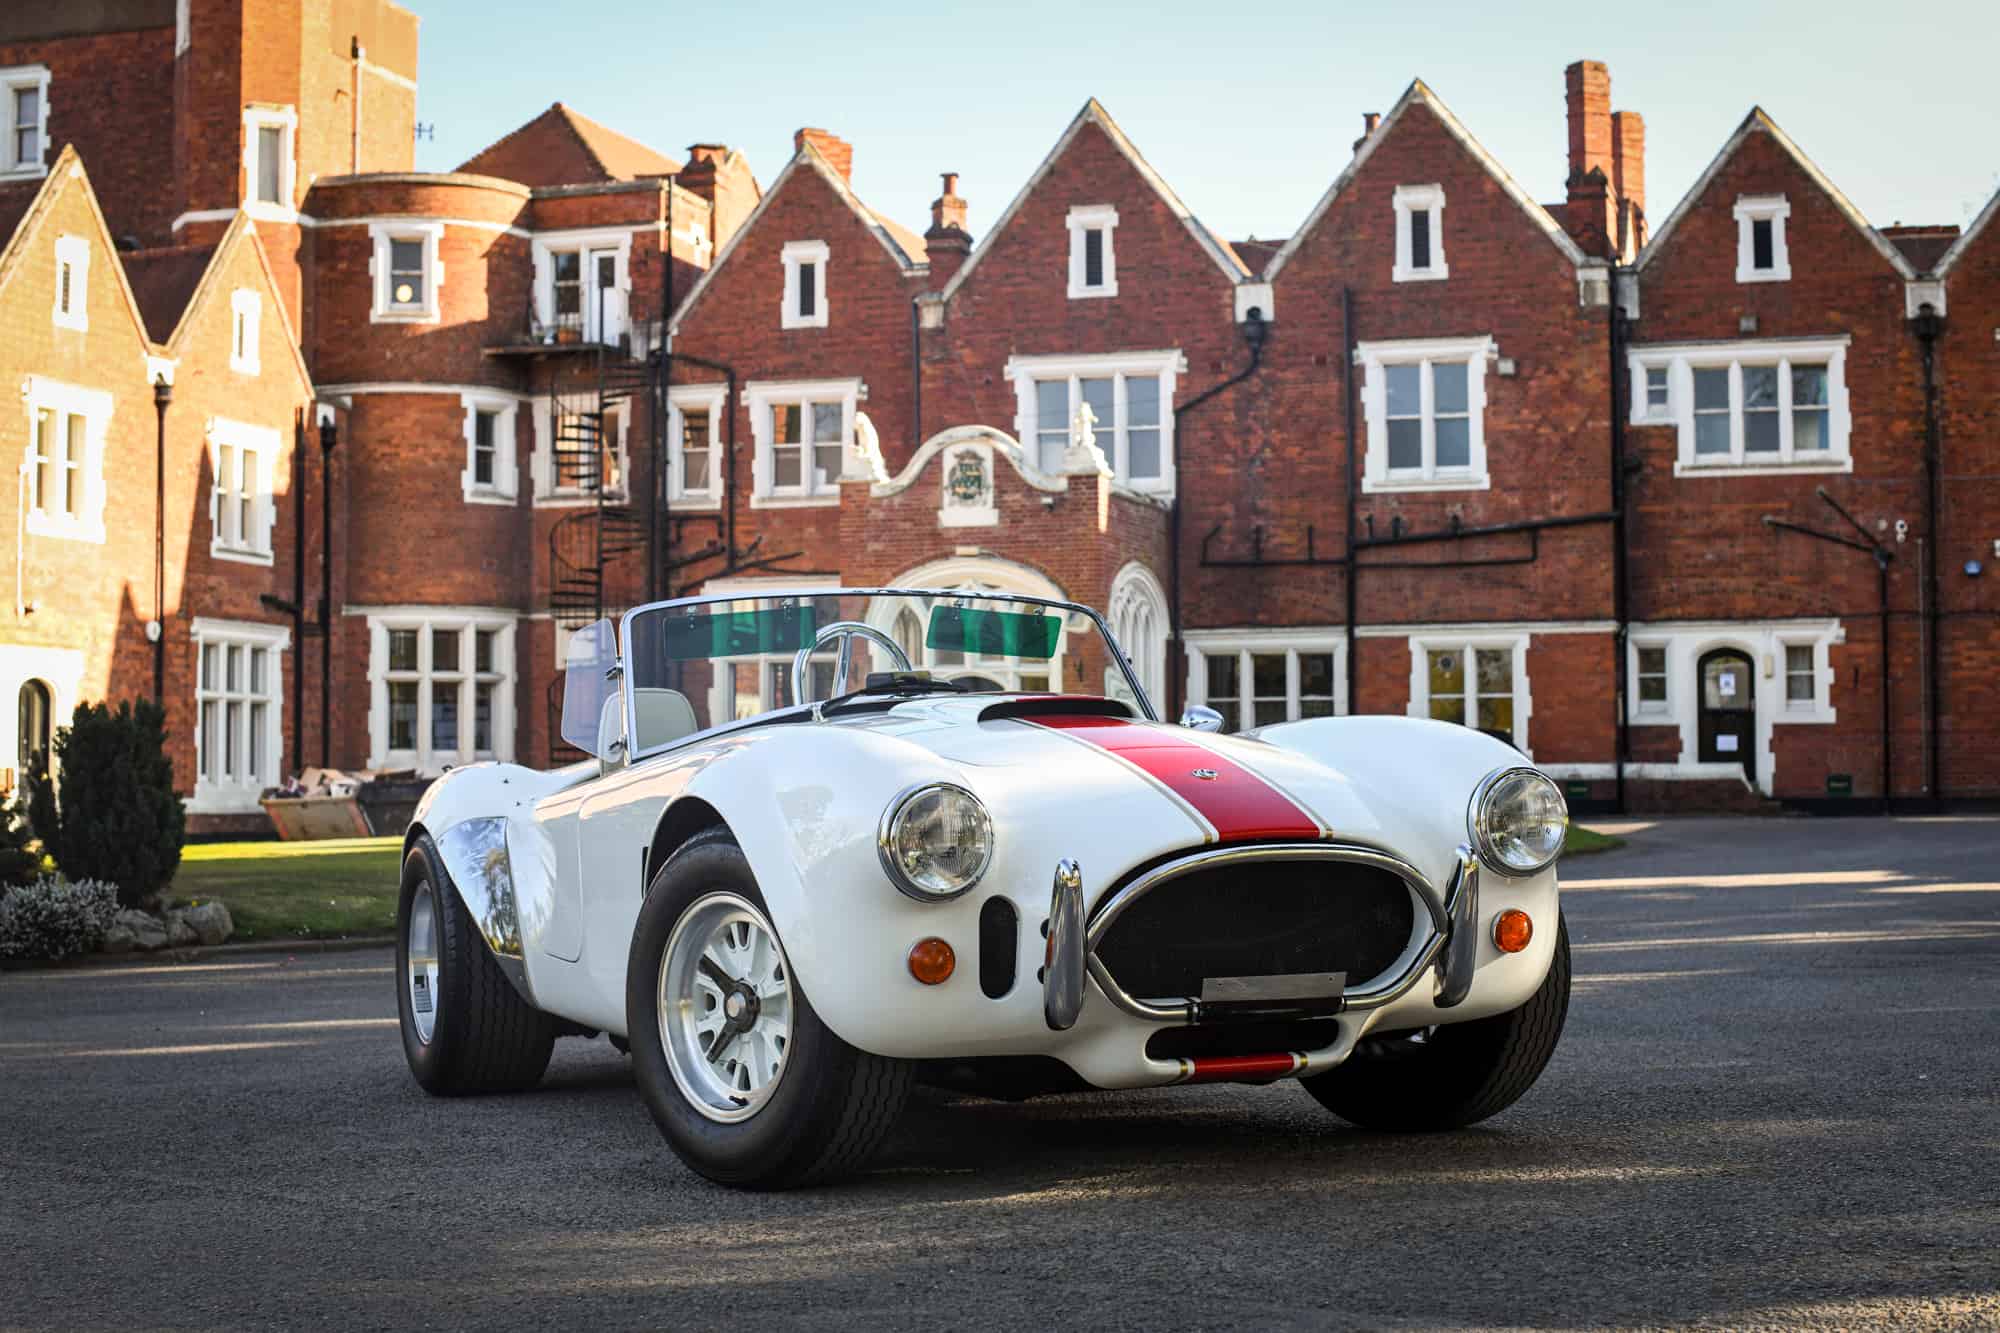 British and Italian classic car icons confirmed for April’s Salon Privé London Concours de Vente